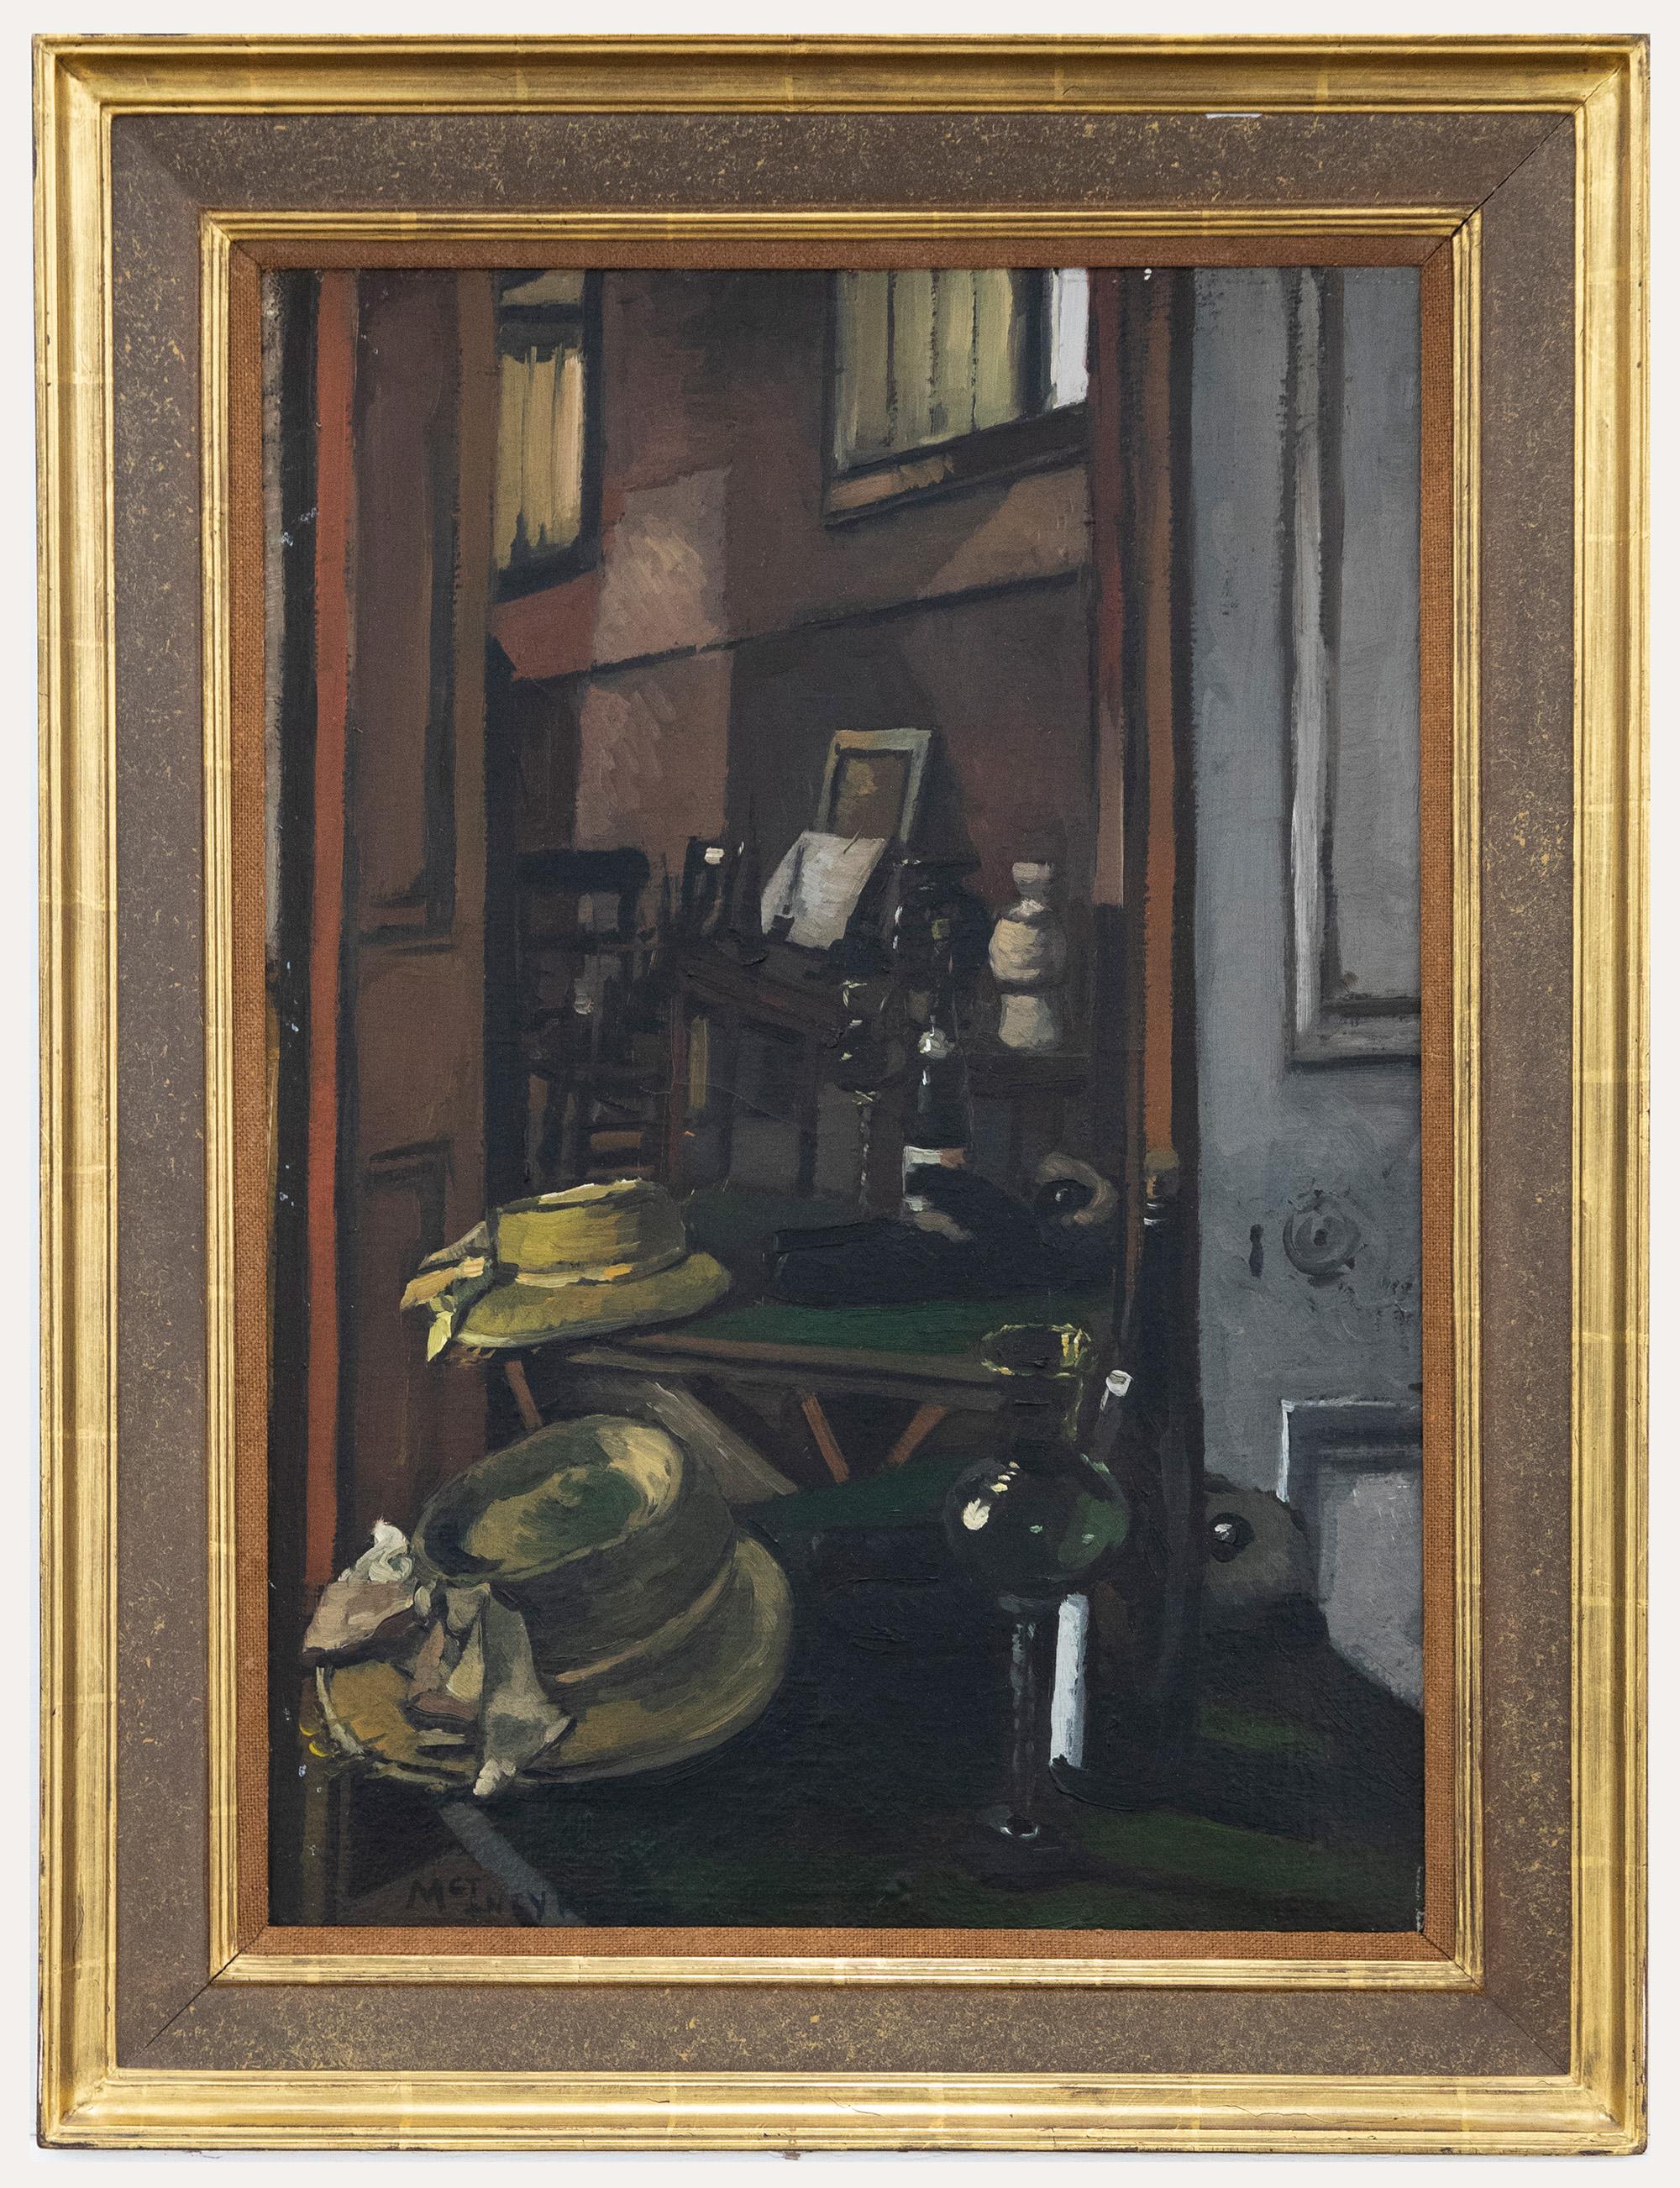 Unknown Still-Life Painting - Joe McIntyre (b.1940) - 20th Century Oil, Interior Study